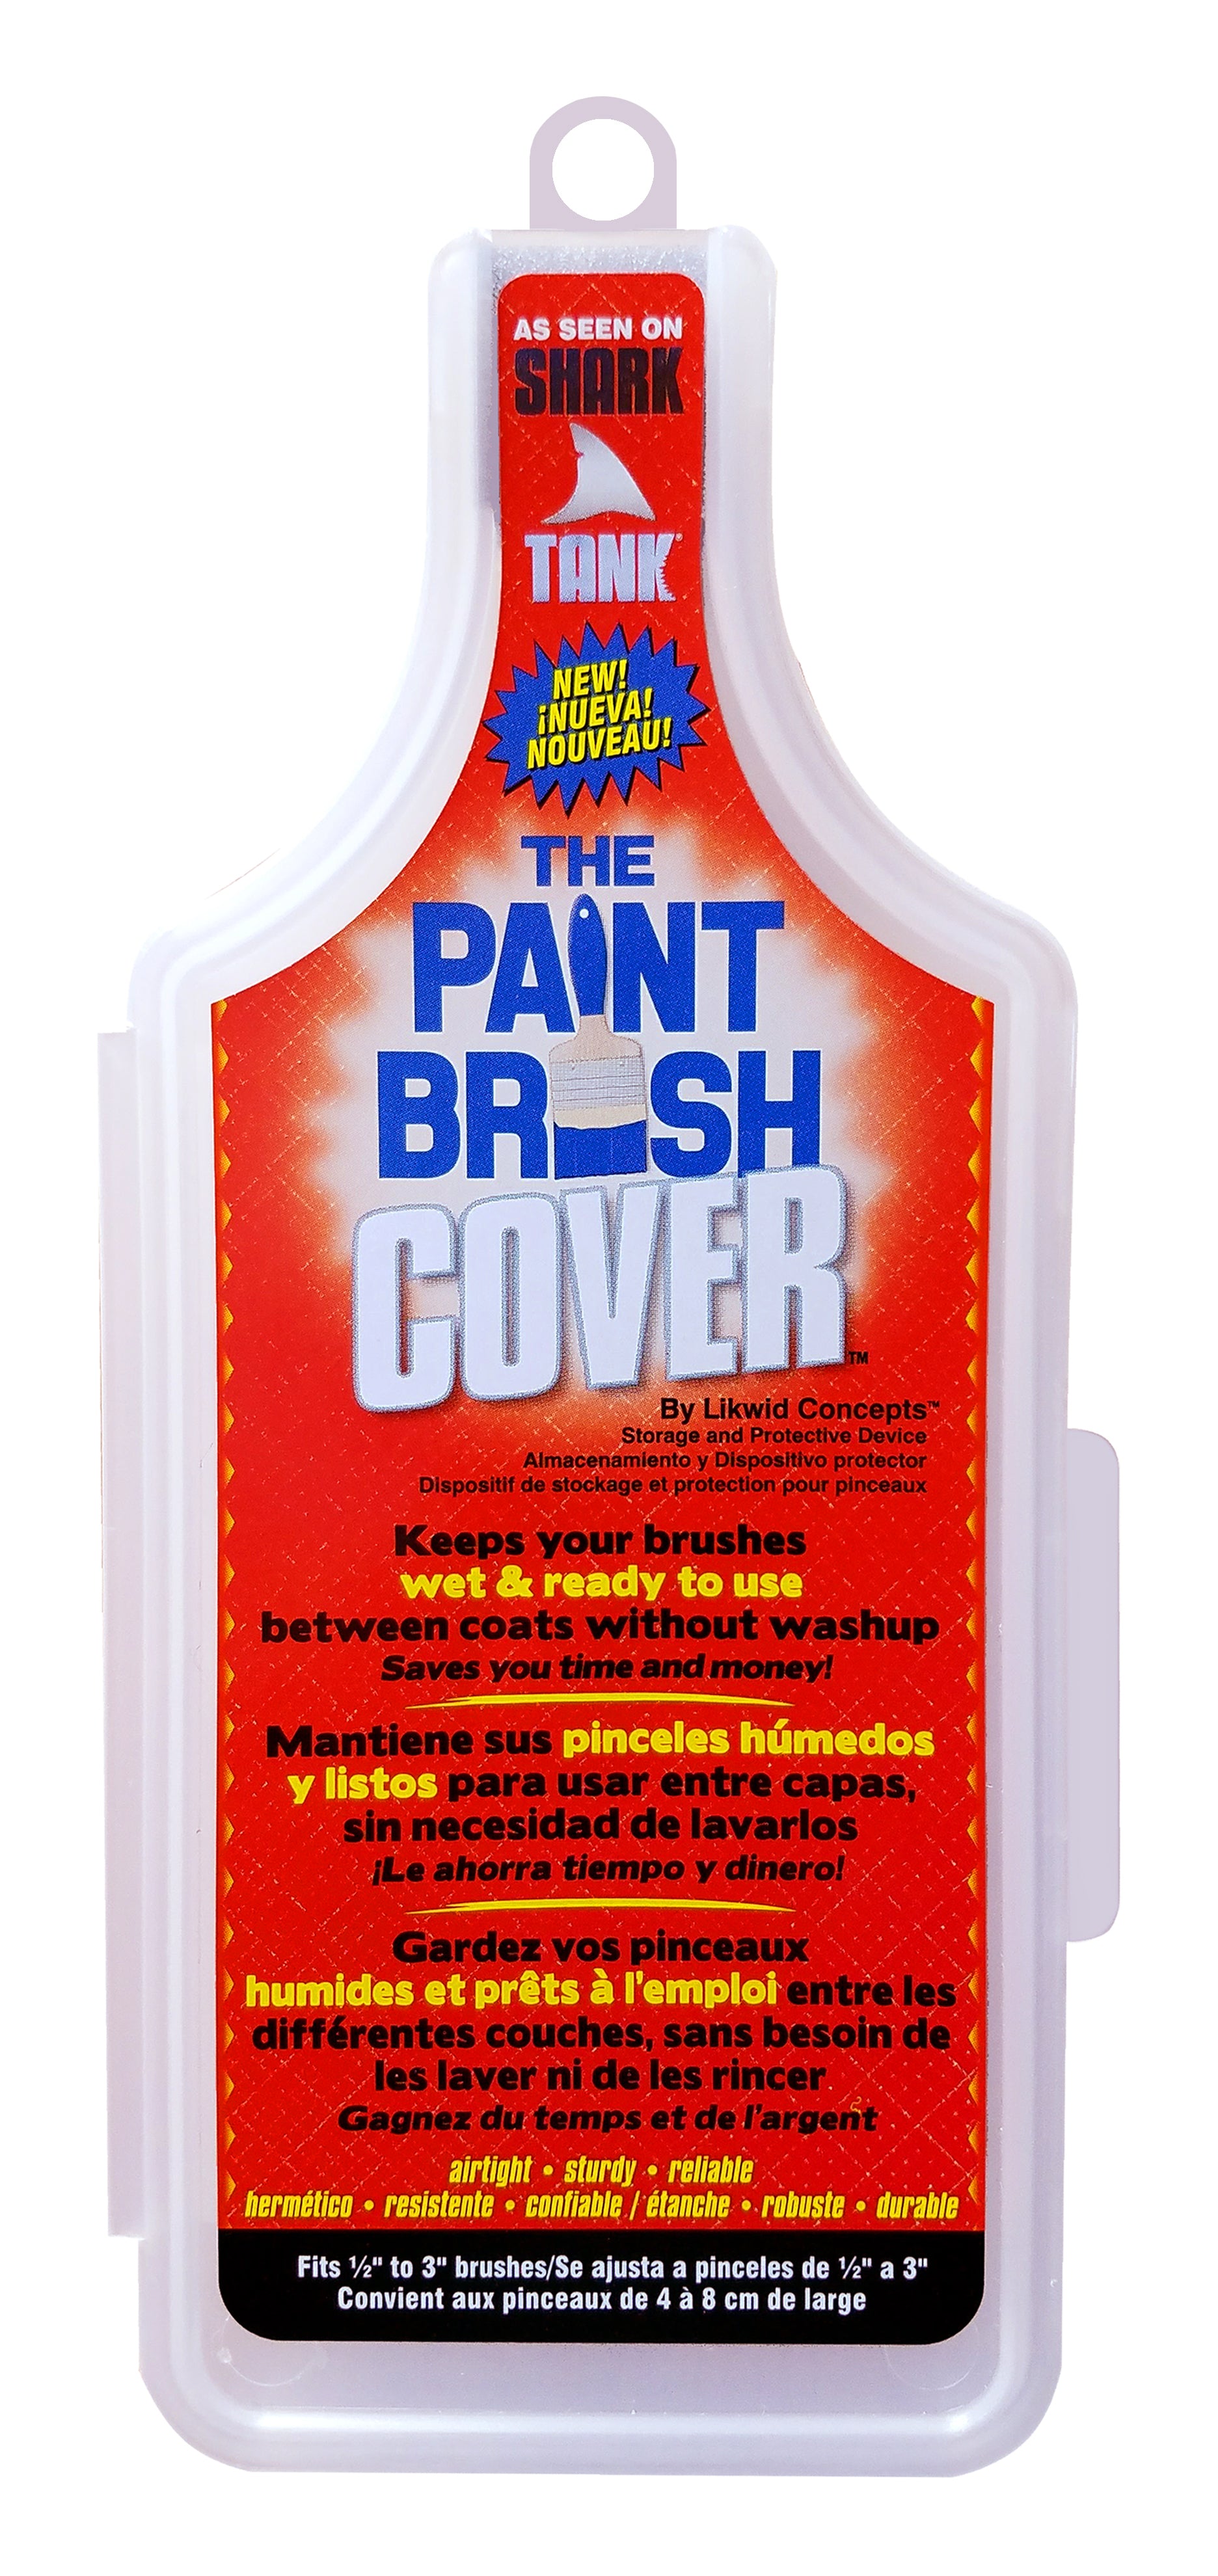 Shark Tank Update: The Paint Brush Cover 